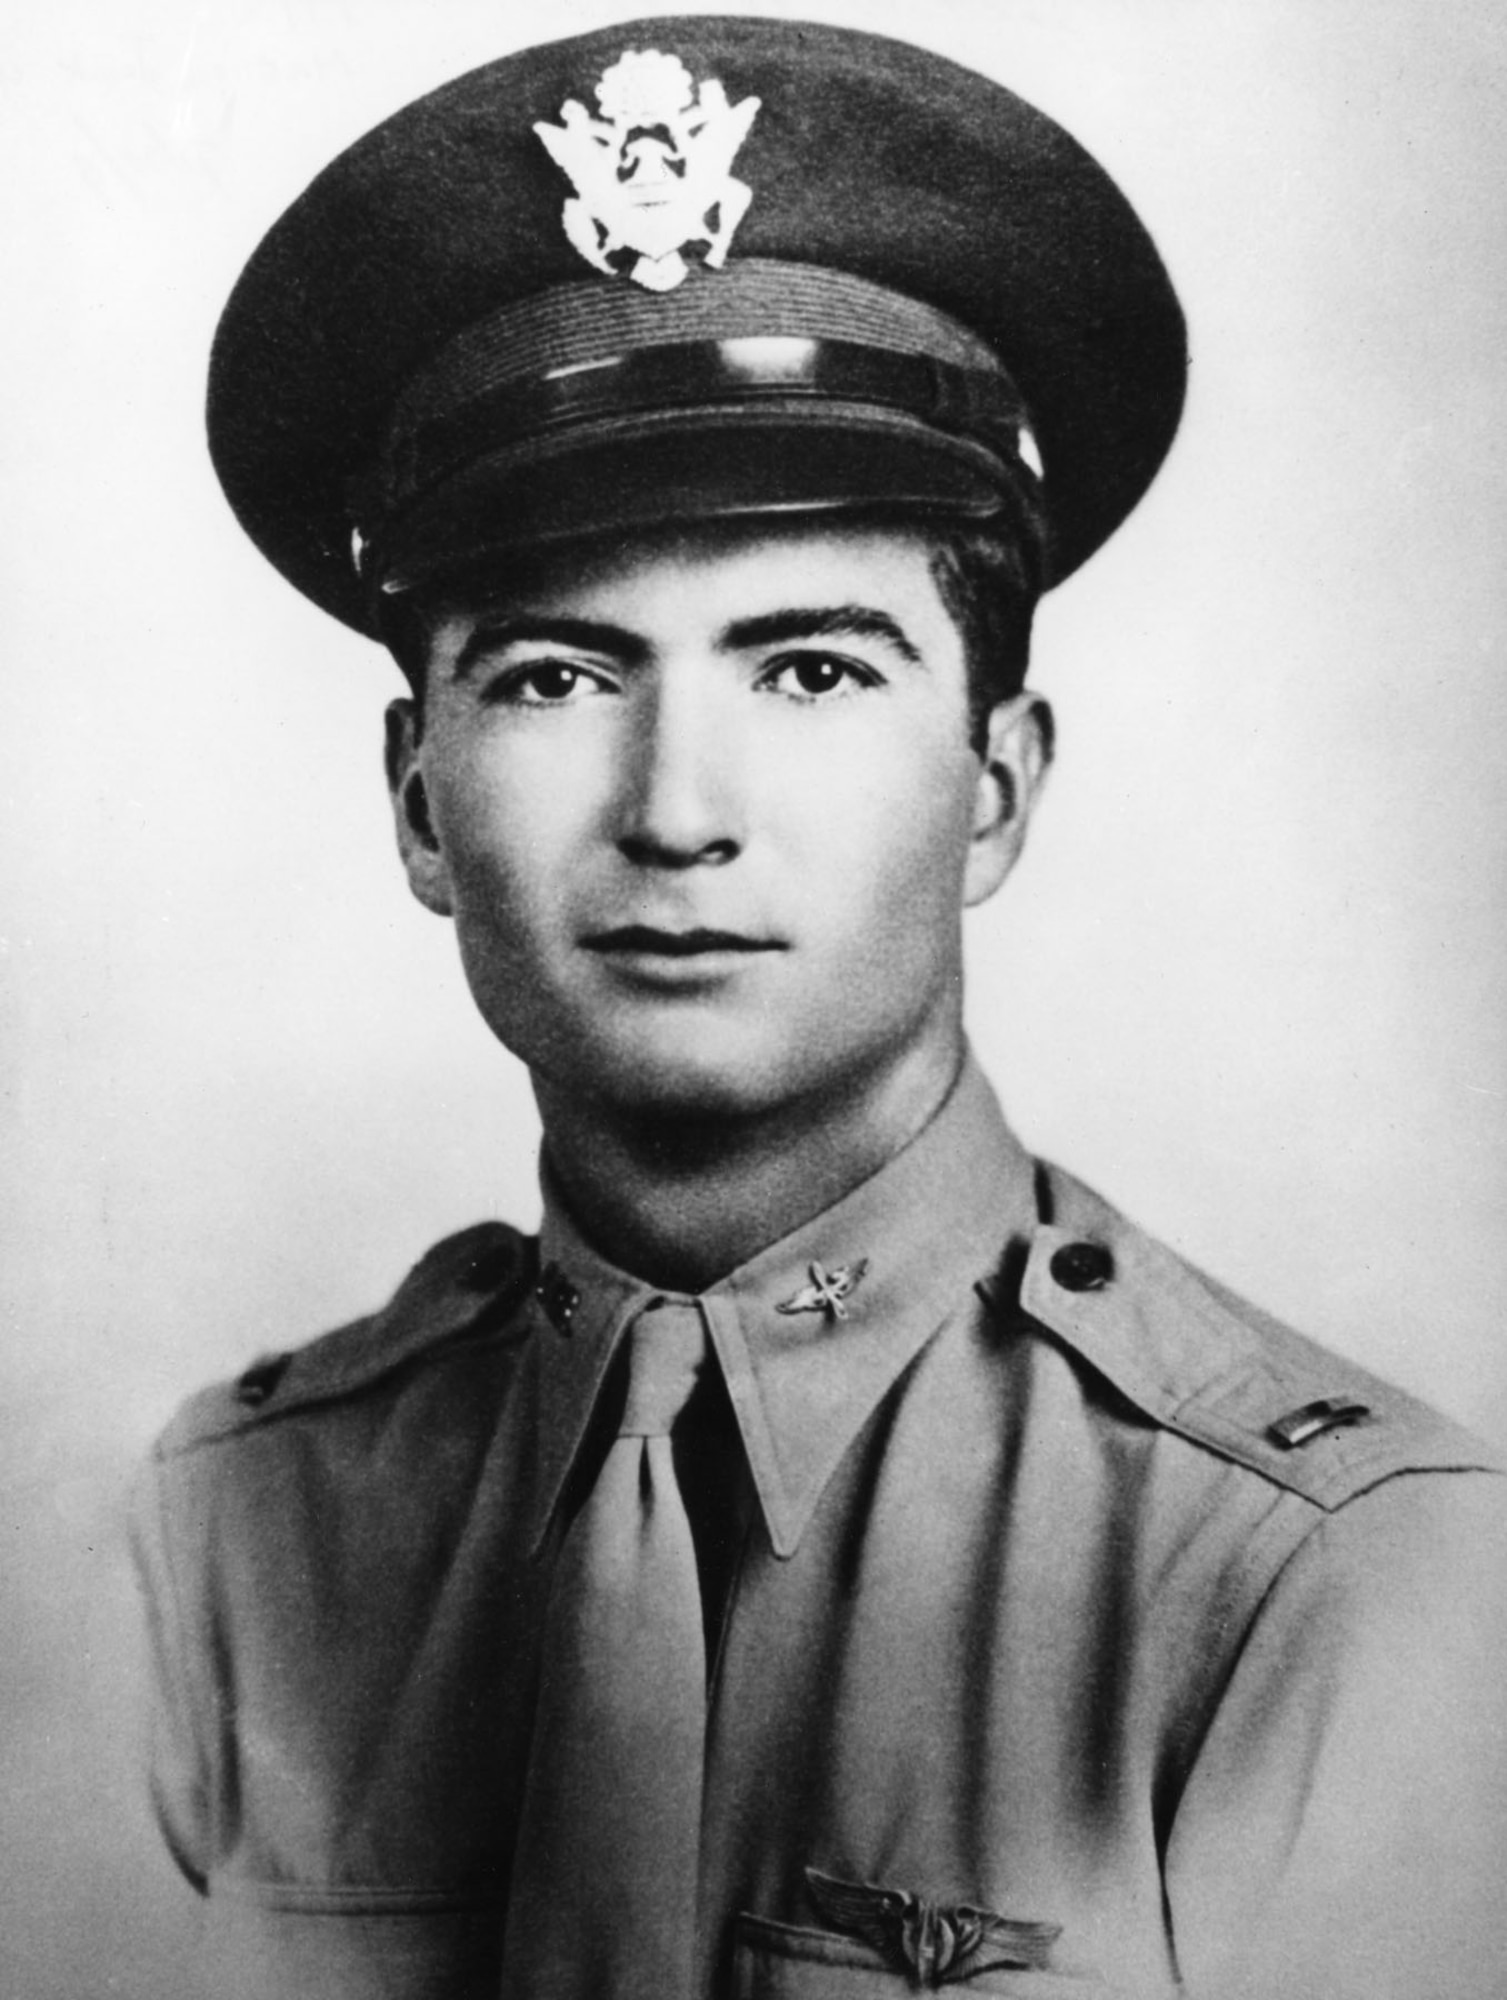 DAYTON, Ohio - 1st Lt. Jack W. Mathis. (U.S. Air Force photo)